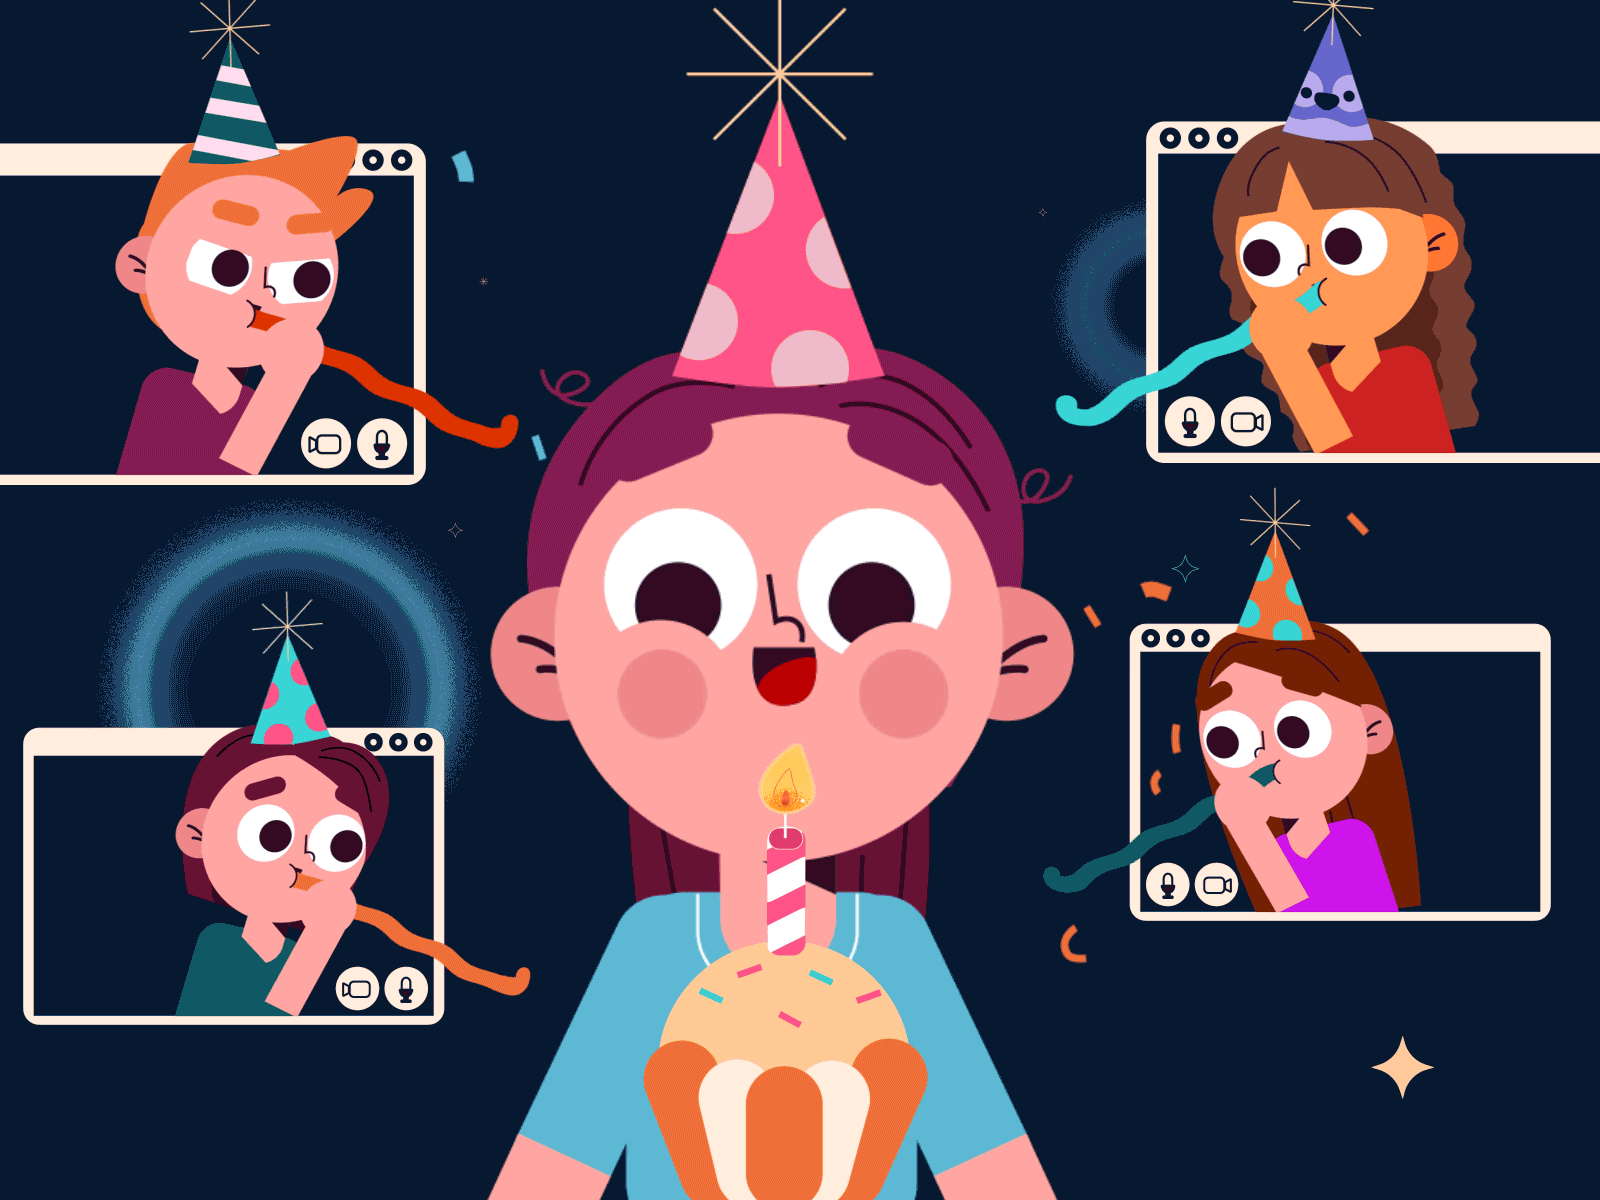 Happy Birthday GIF Animation on Behance